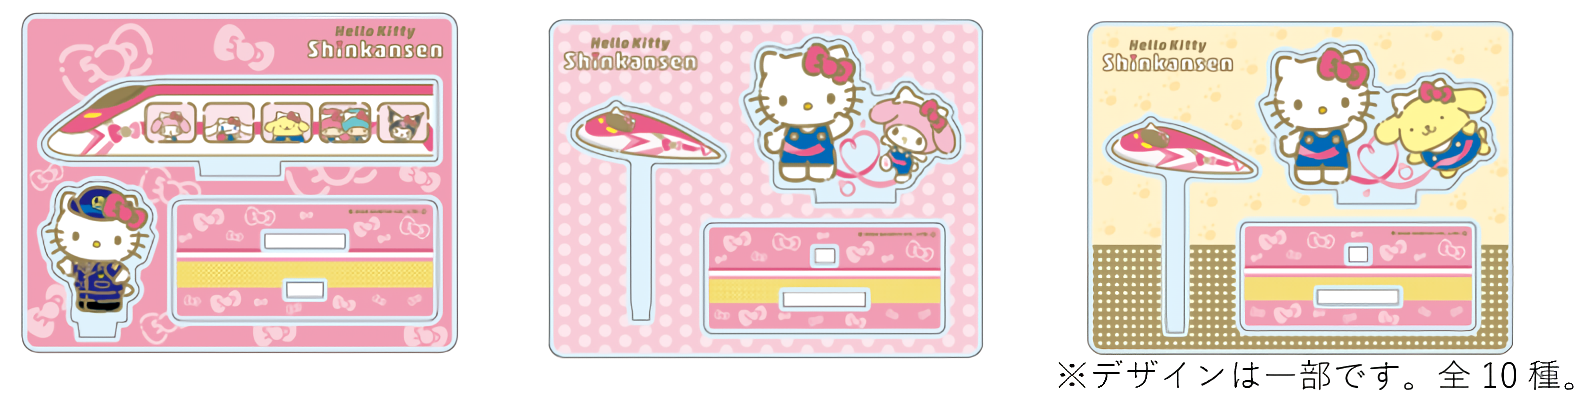 Stand Akrilik Rahasia Shinkansen Hello Kitty Ulang Tahun ke-50 Hello Kitty